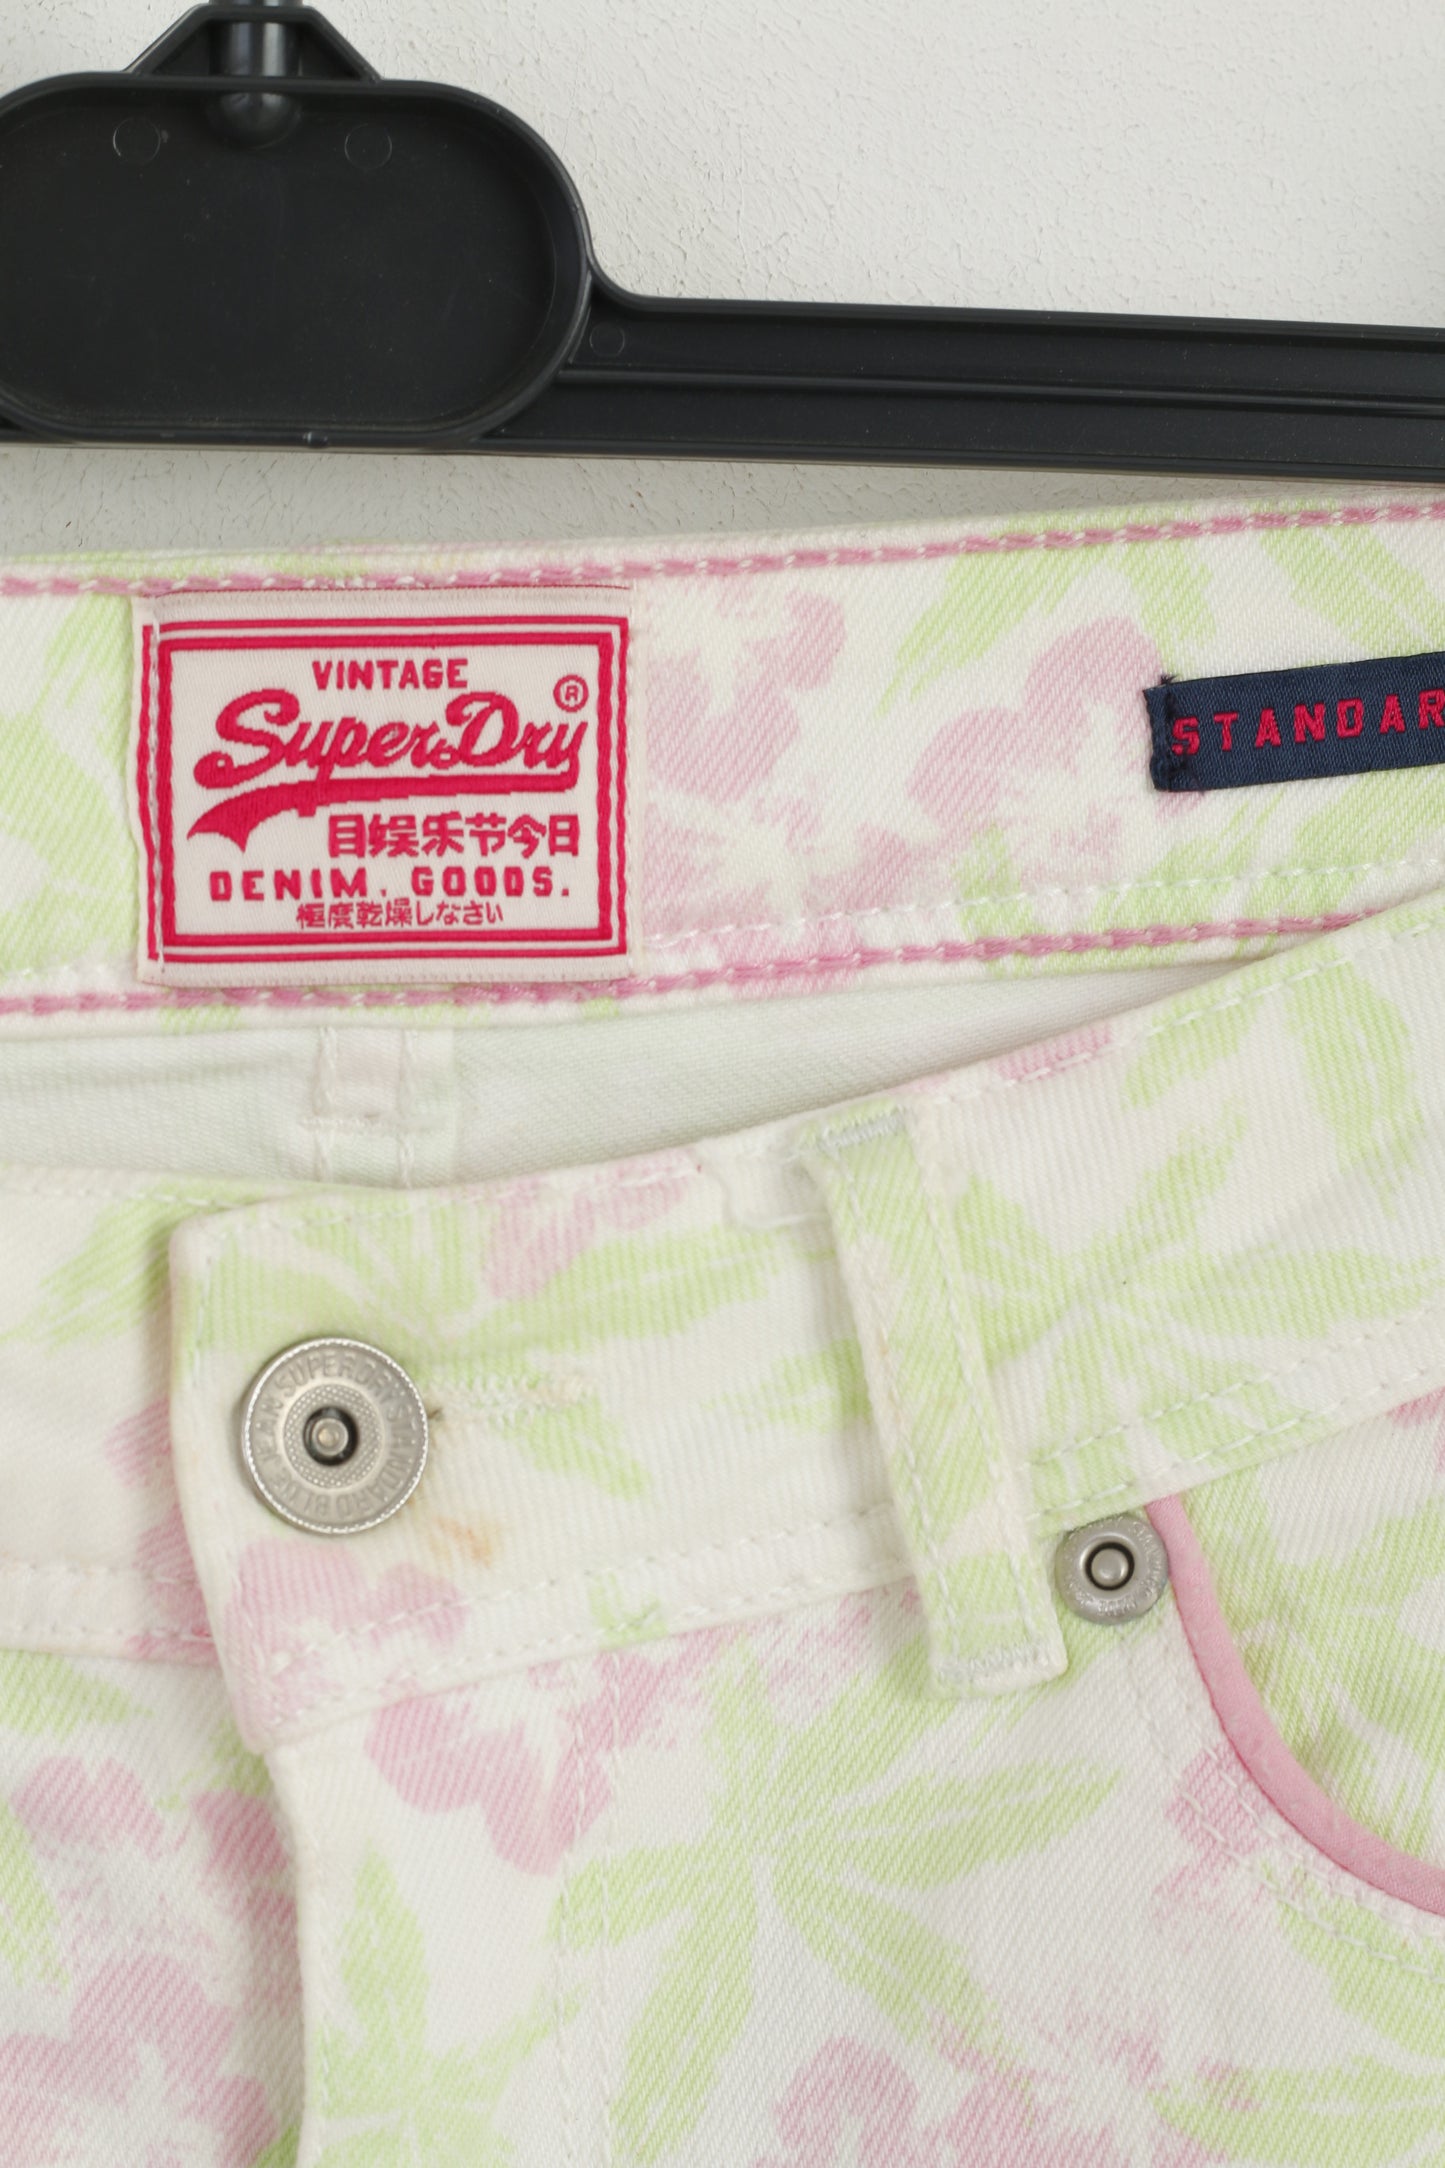 Superdry Women W 29 L 32 Trousers White Neon Floral Standard Skinny Cotton Pants